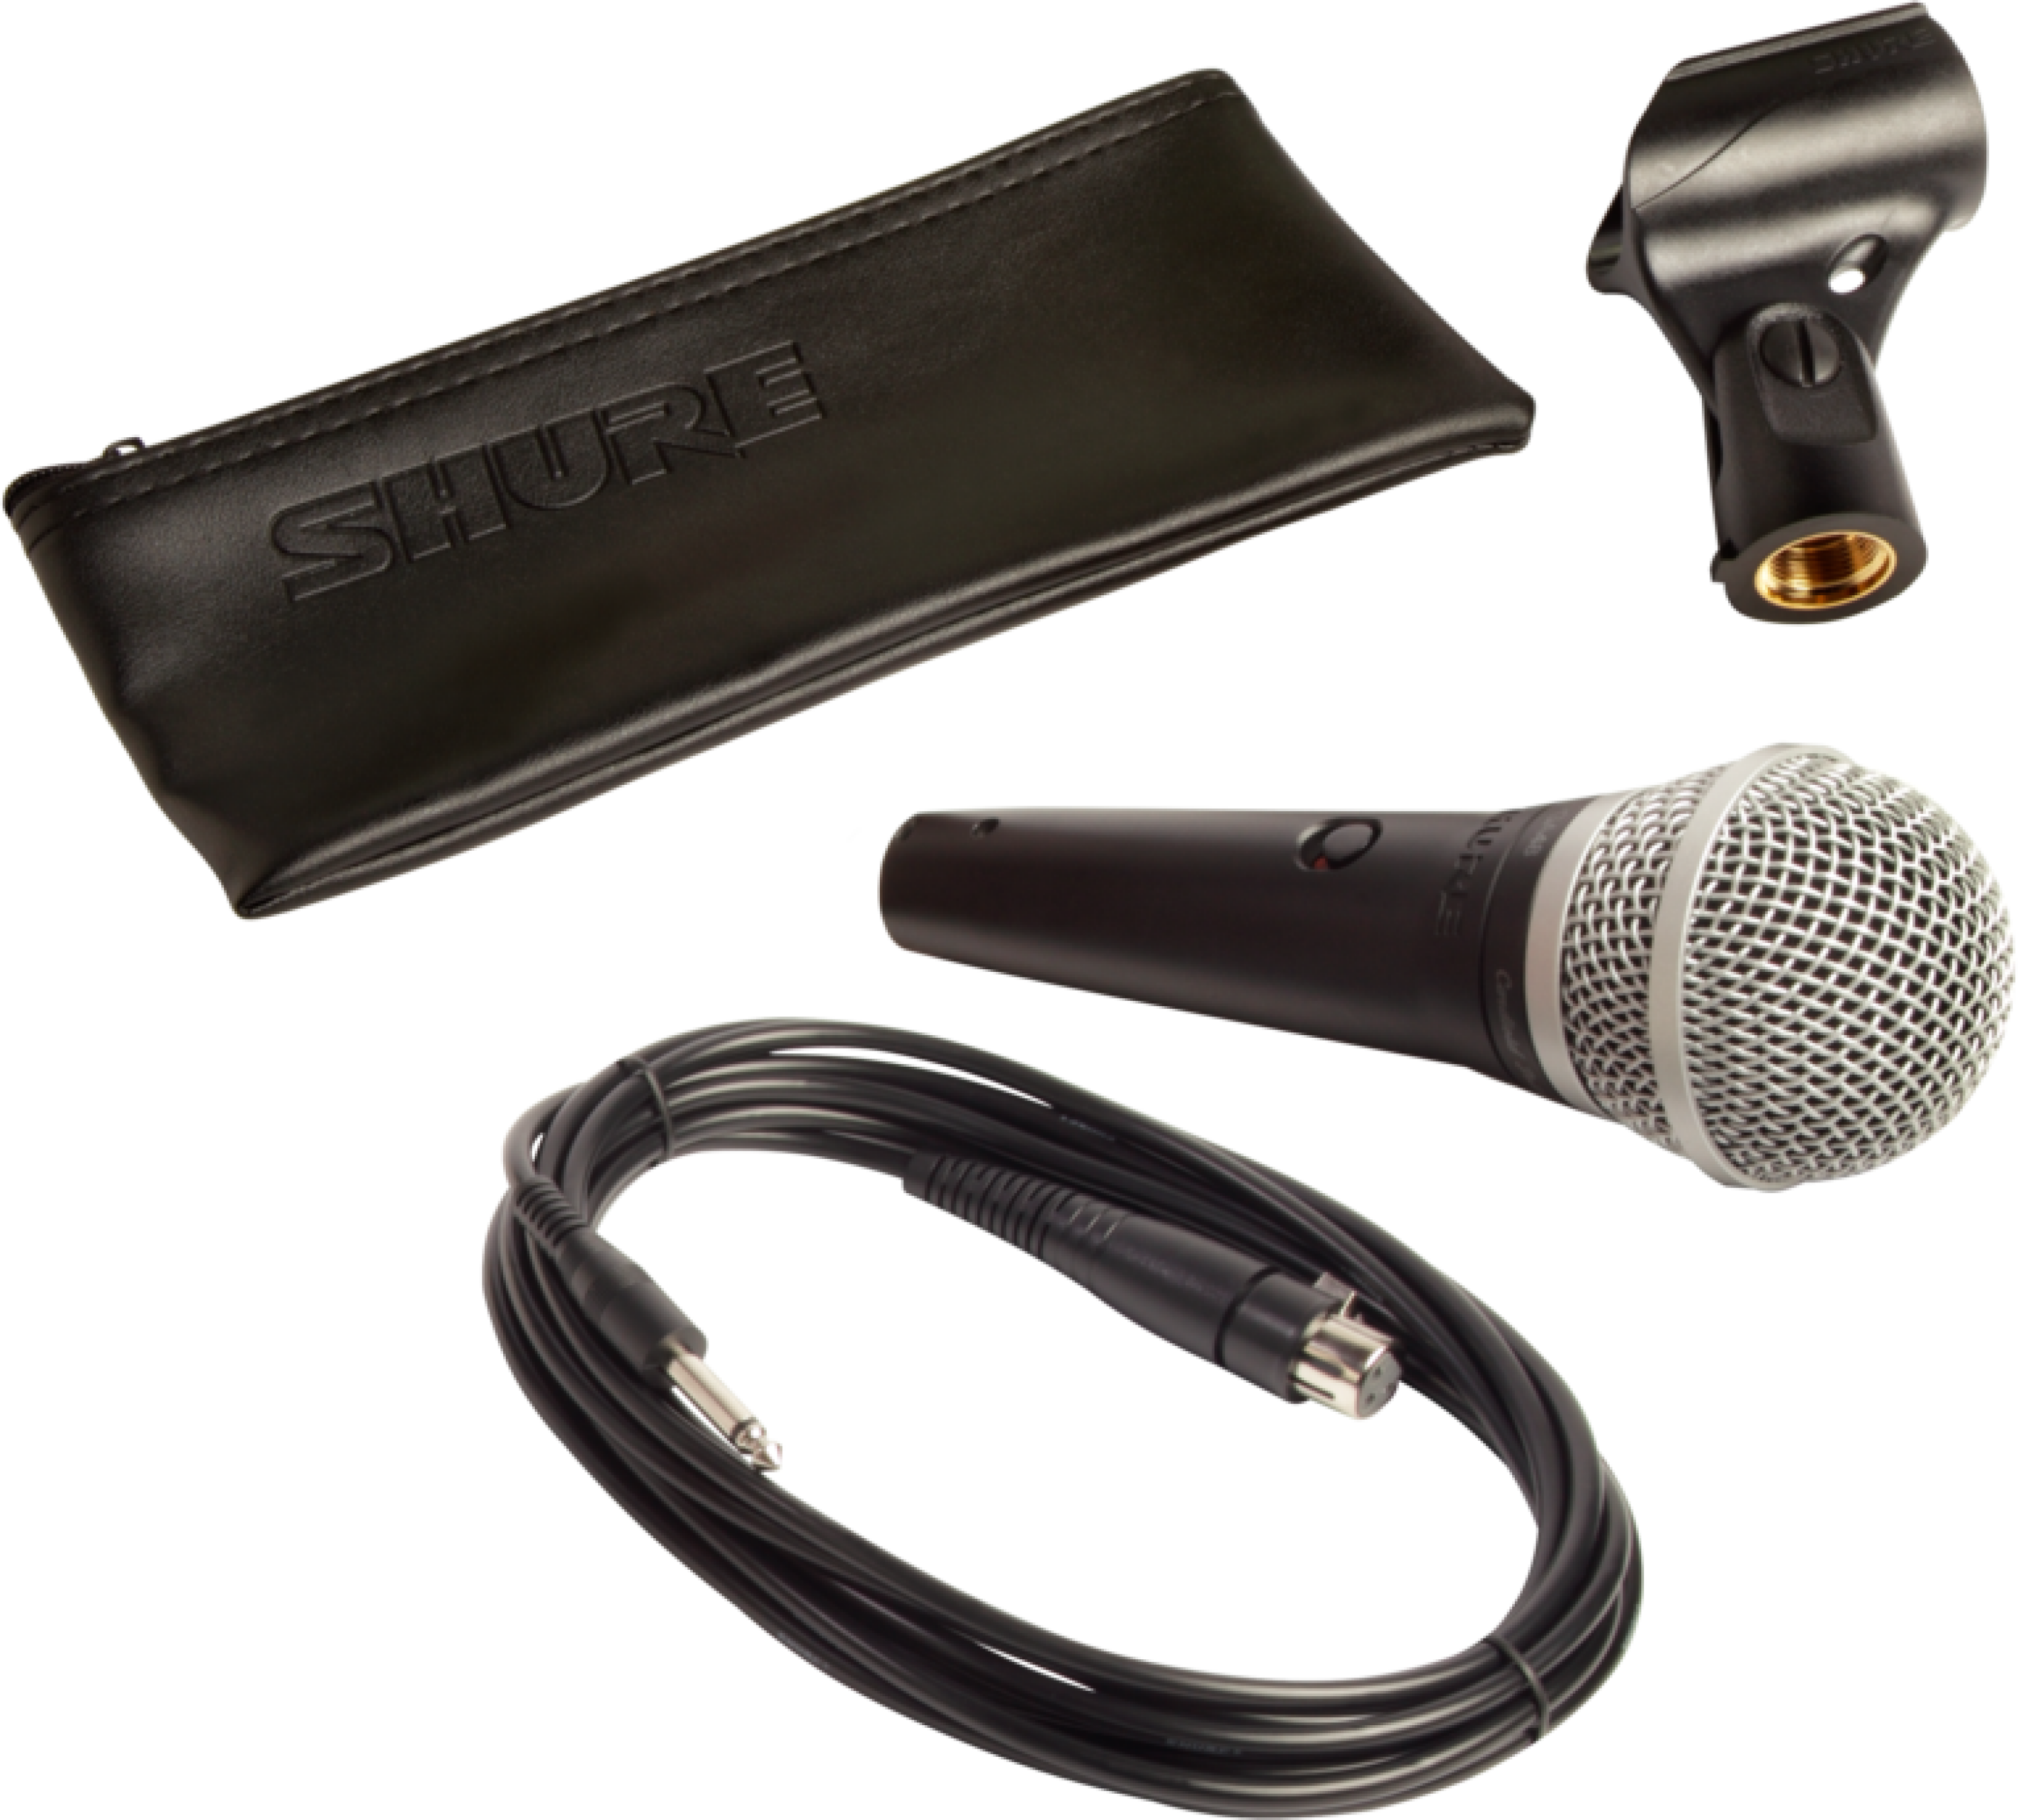 How to Pick the Best Karaoke Microphone - Shure USA